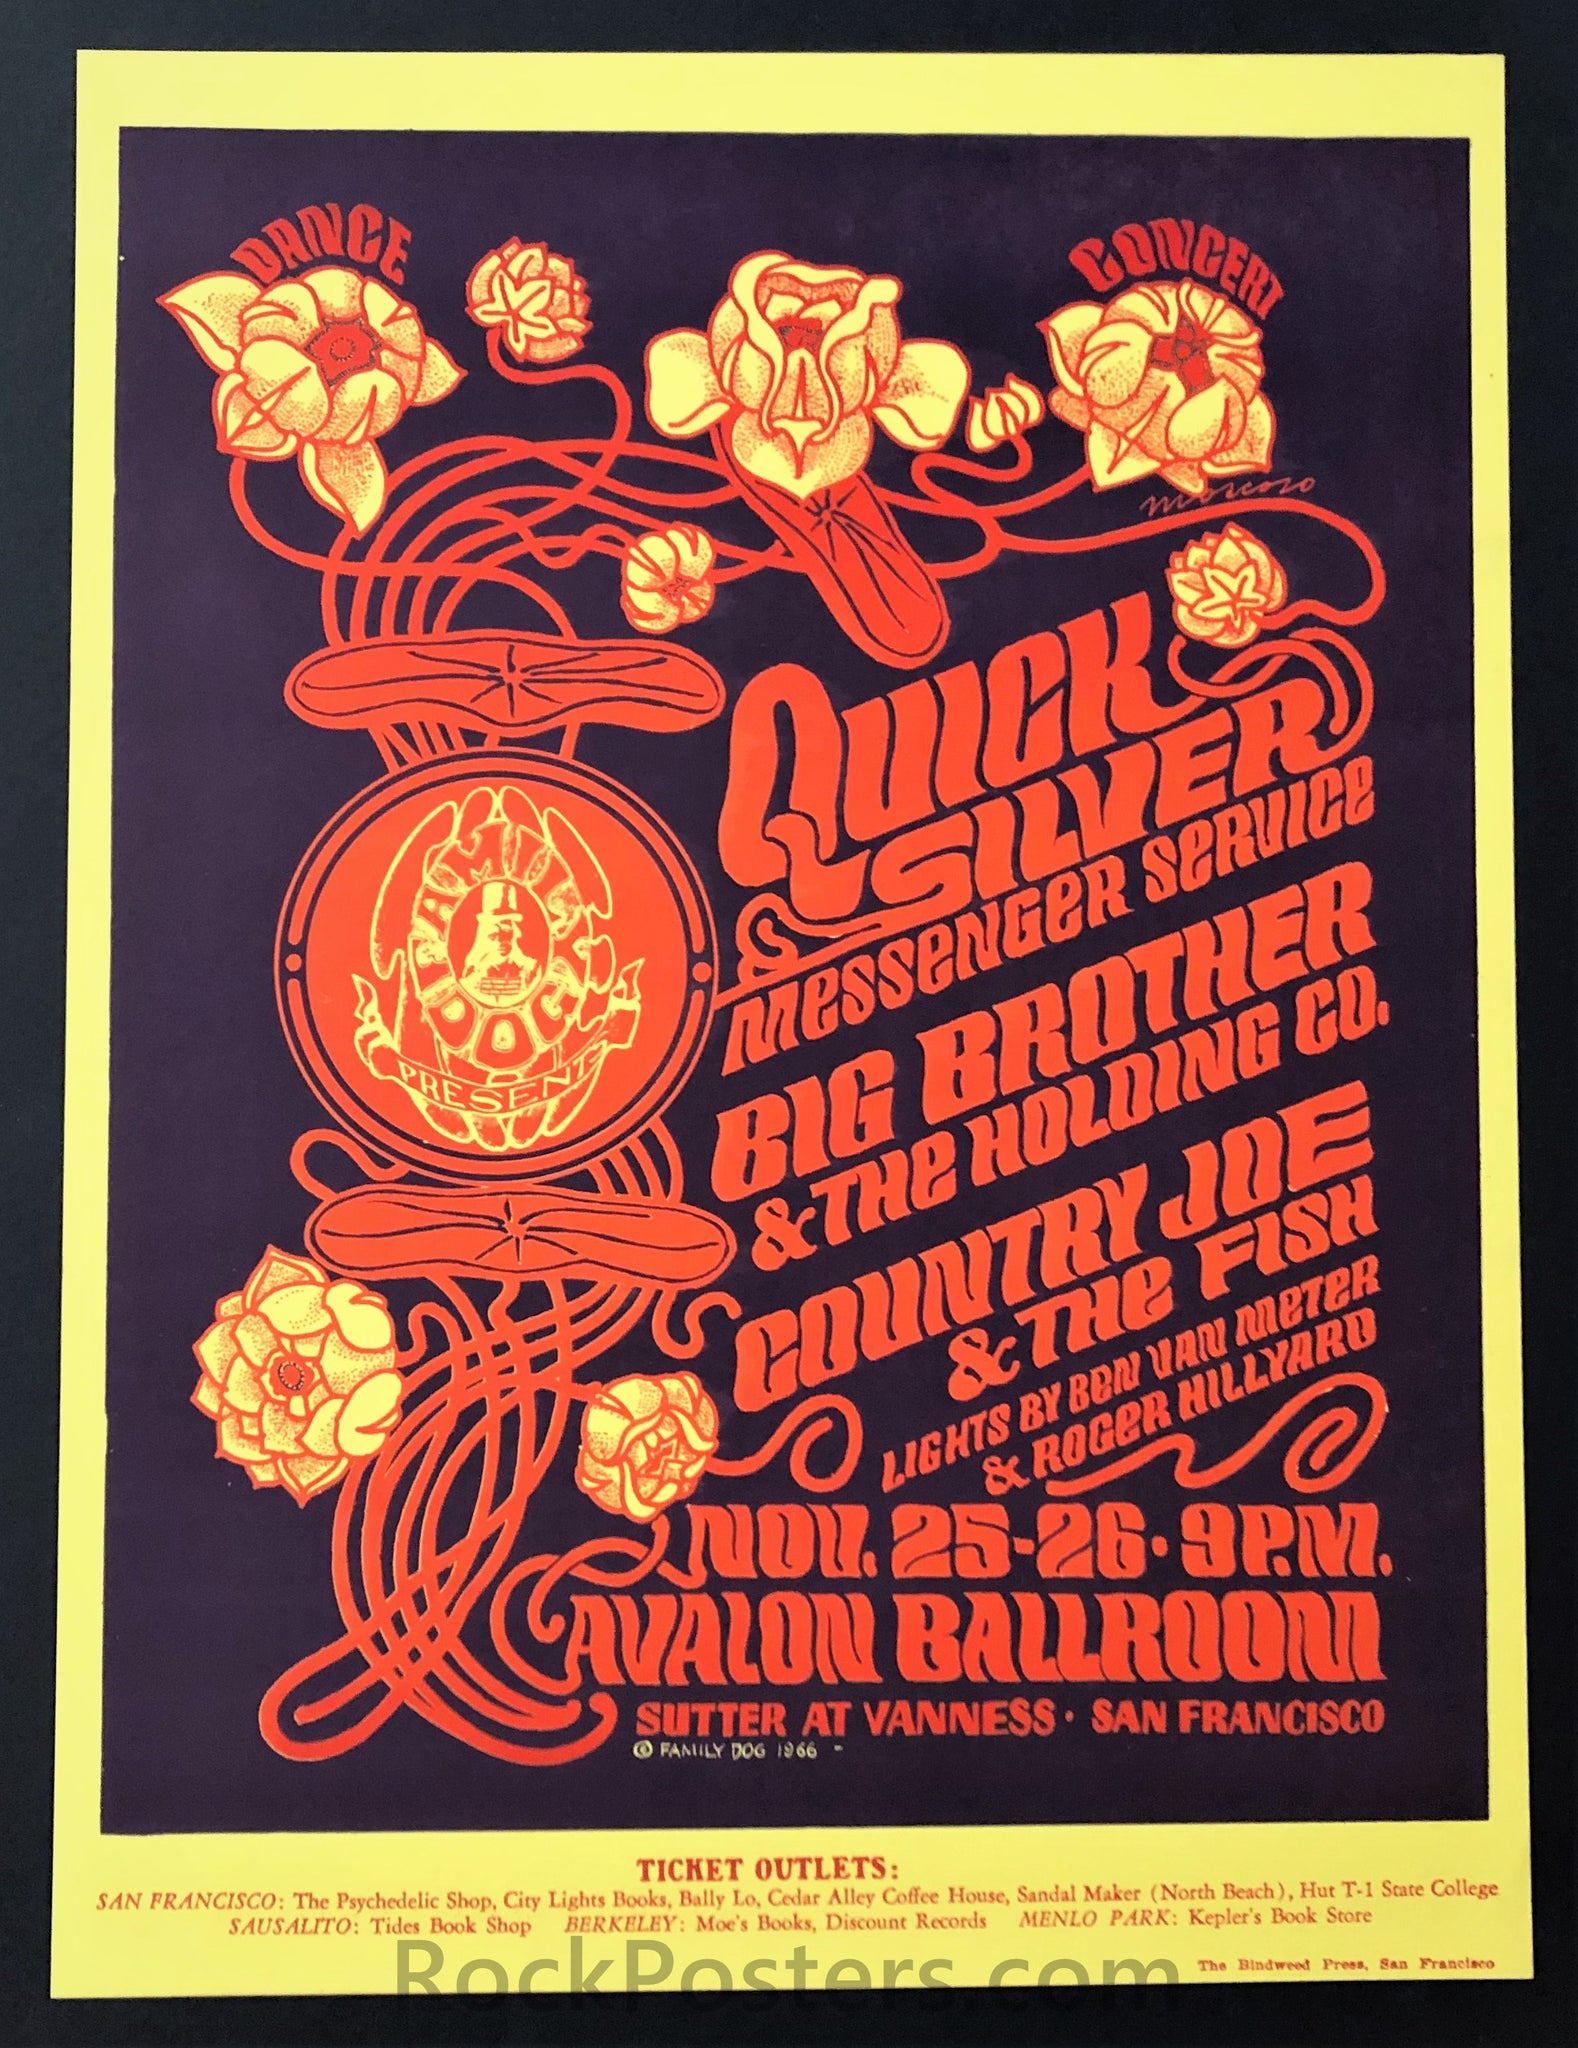 AUCTION - FD-36 - Big Brother Janis Joplin QMS - 1966 Poster - Avalon Ballroom - Mint